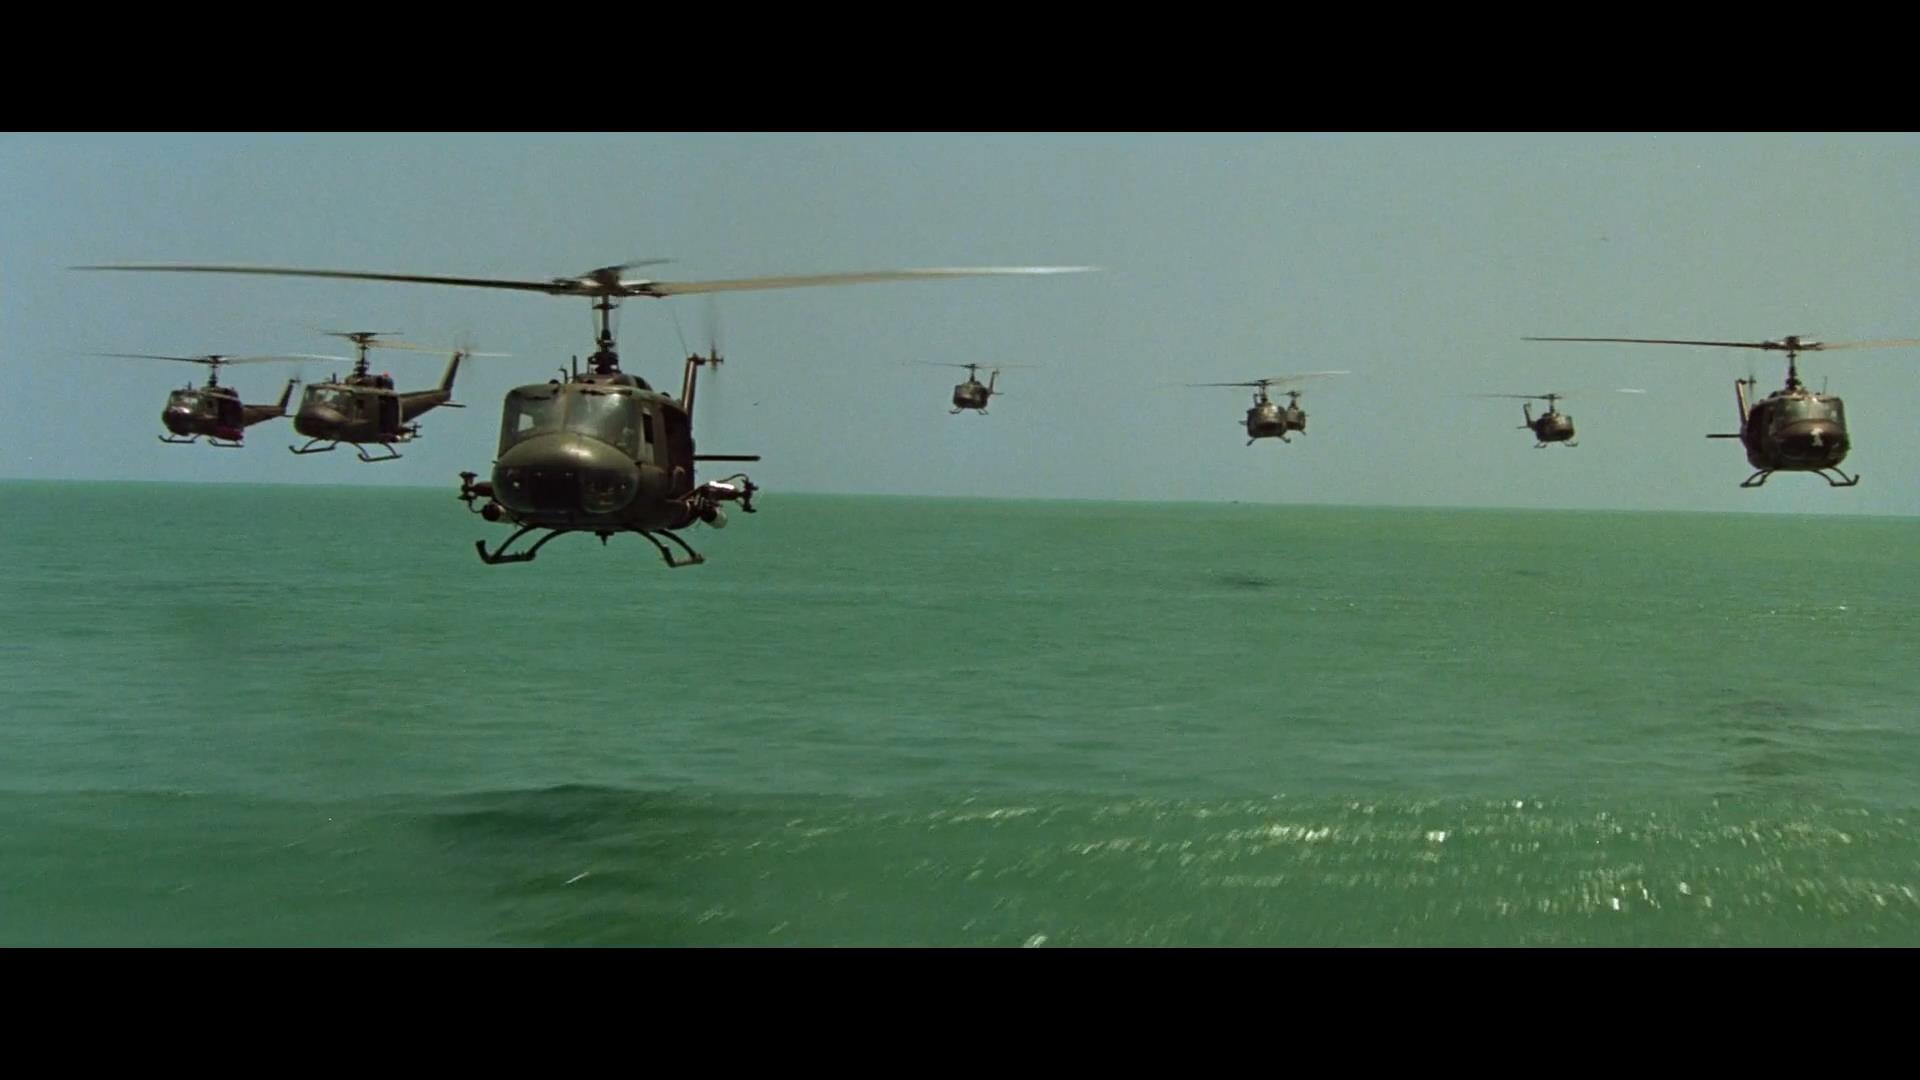 Amazing Apocalypse Now Pictures & Backgrounds